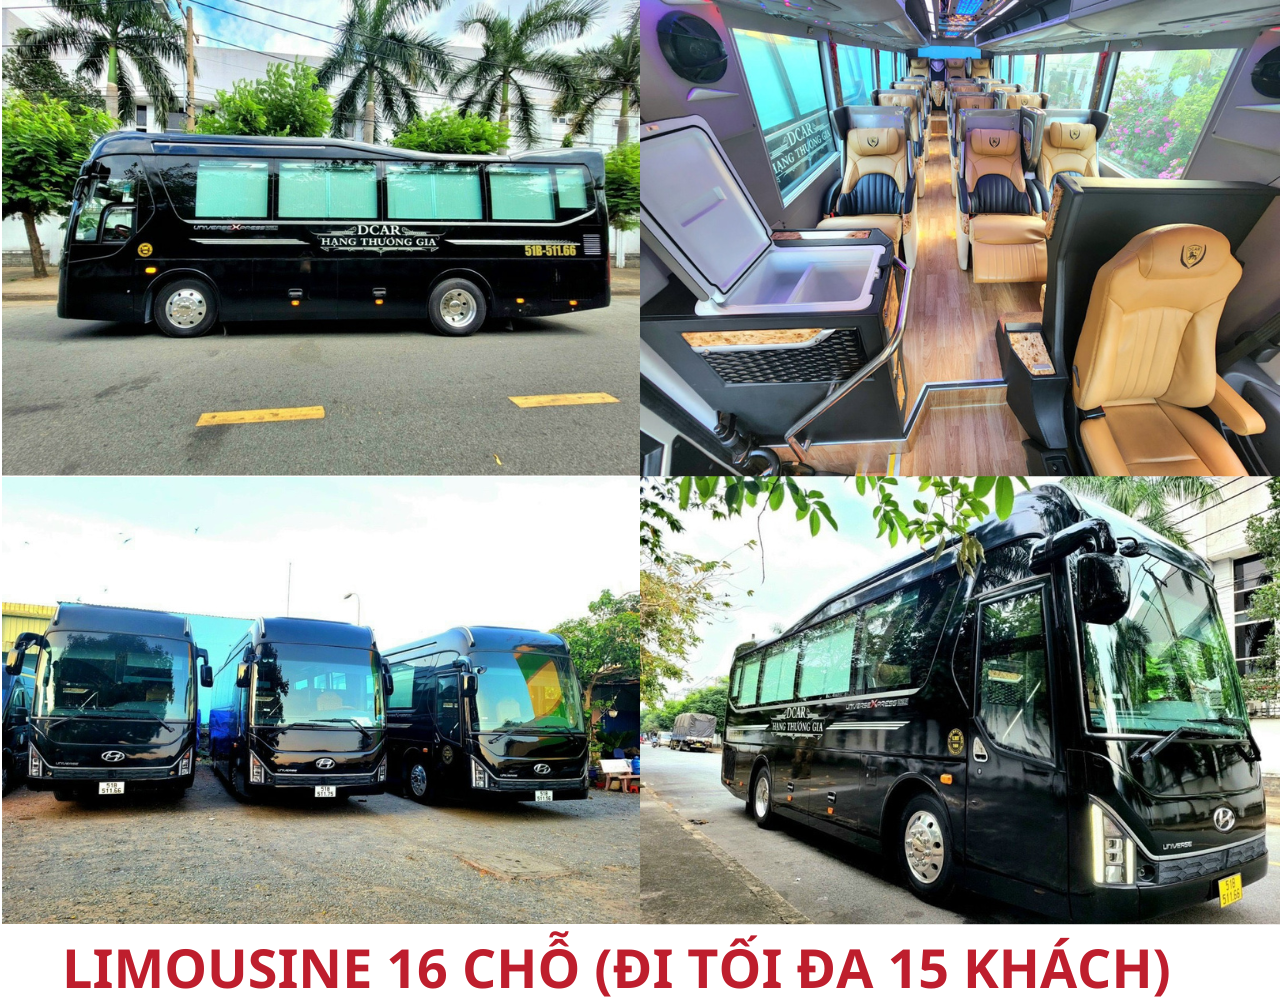 limousine-16-for-travel-toi-da-15-passenger.png (2.26 MB)